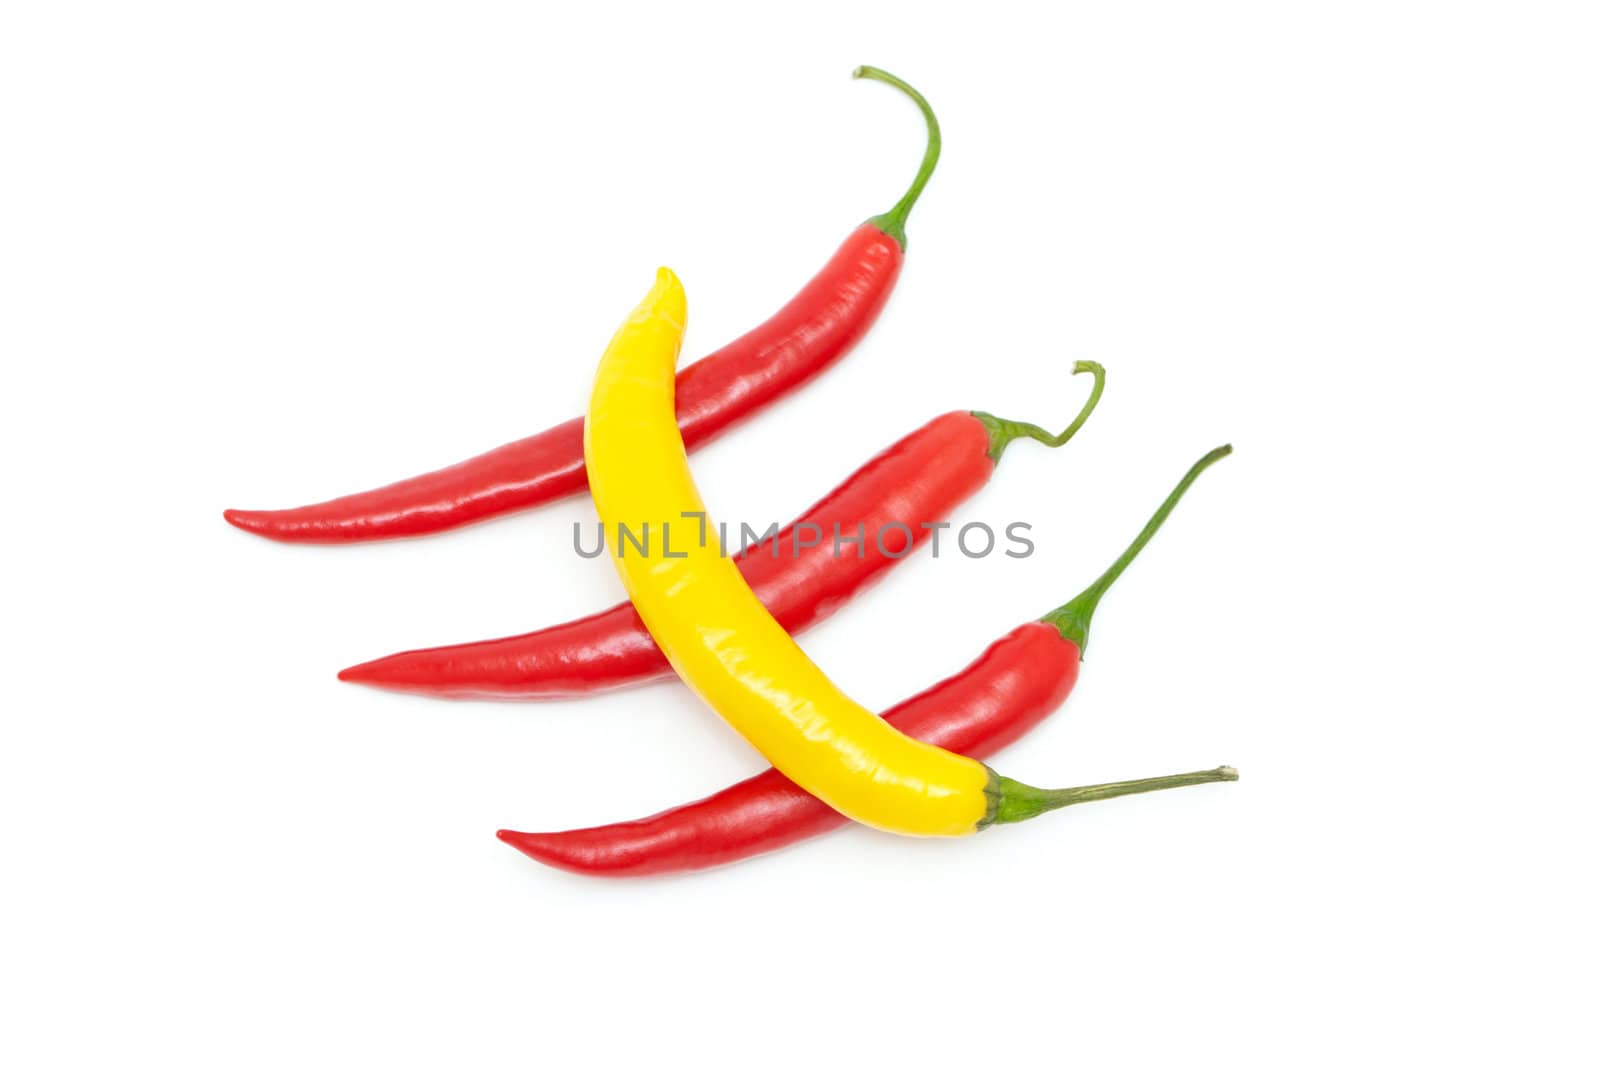 Chili peppers diagonally by Olinkau